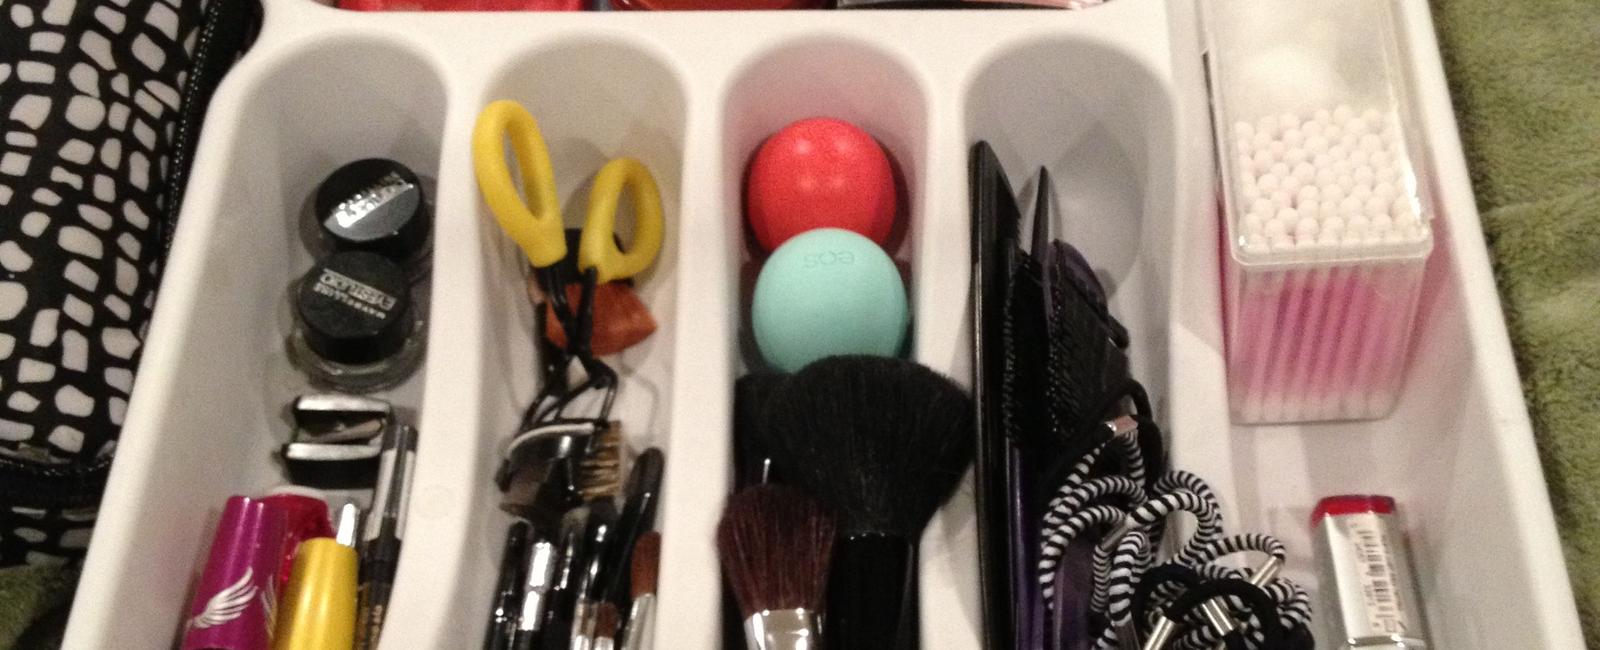 Organize your bathroom essentials with a silverware tray